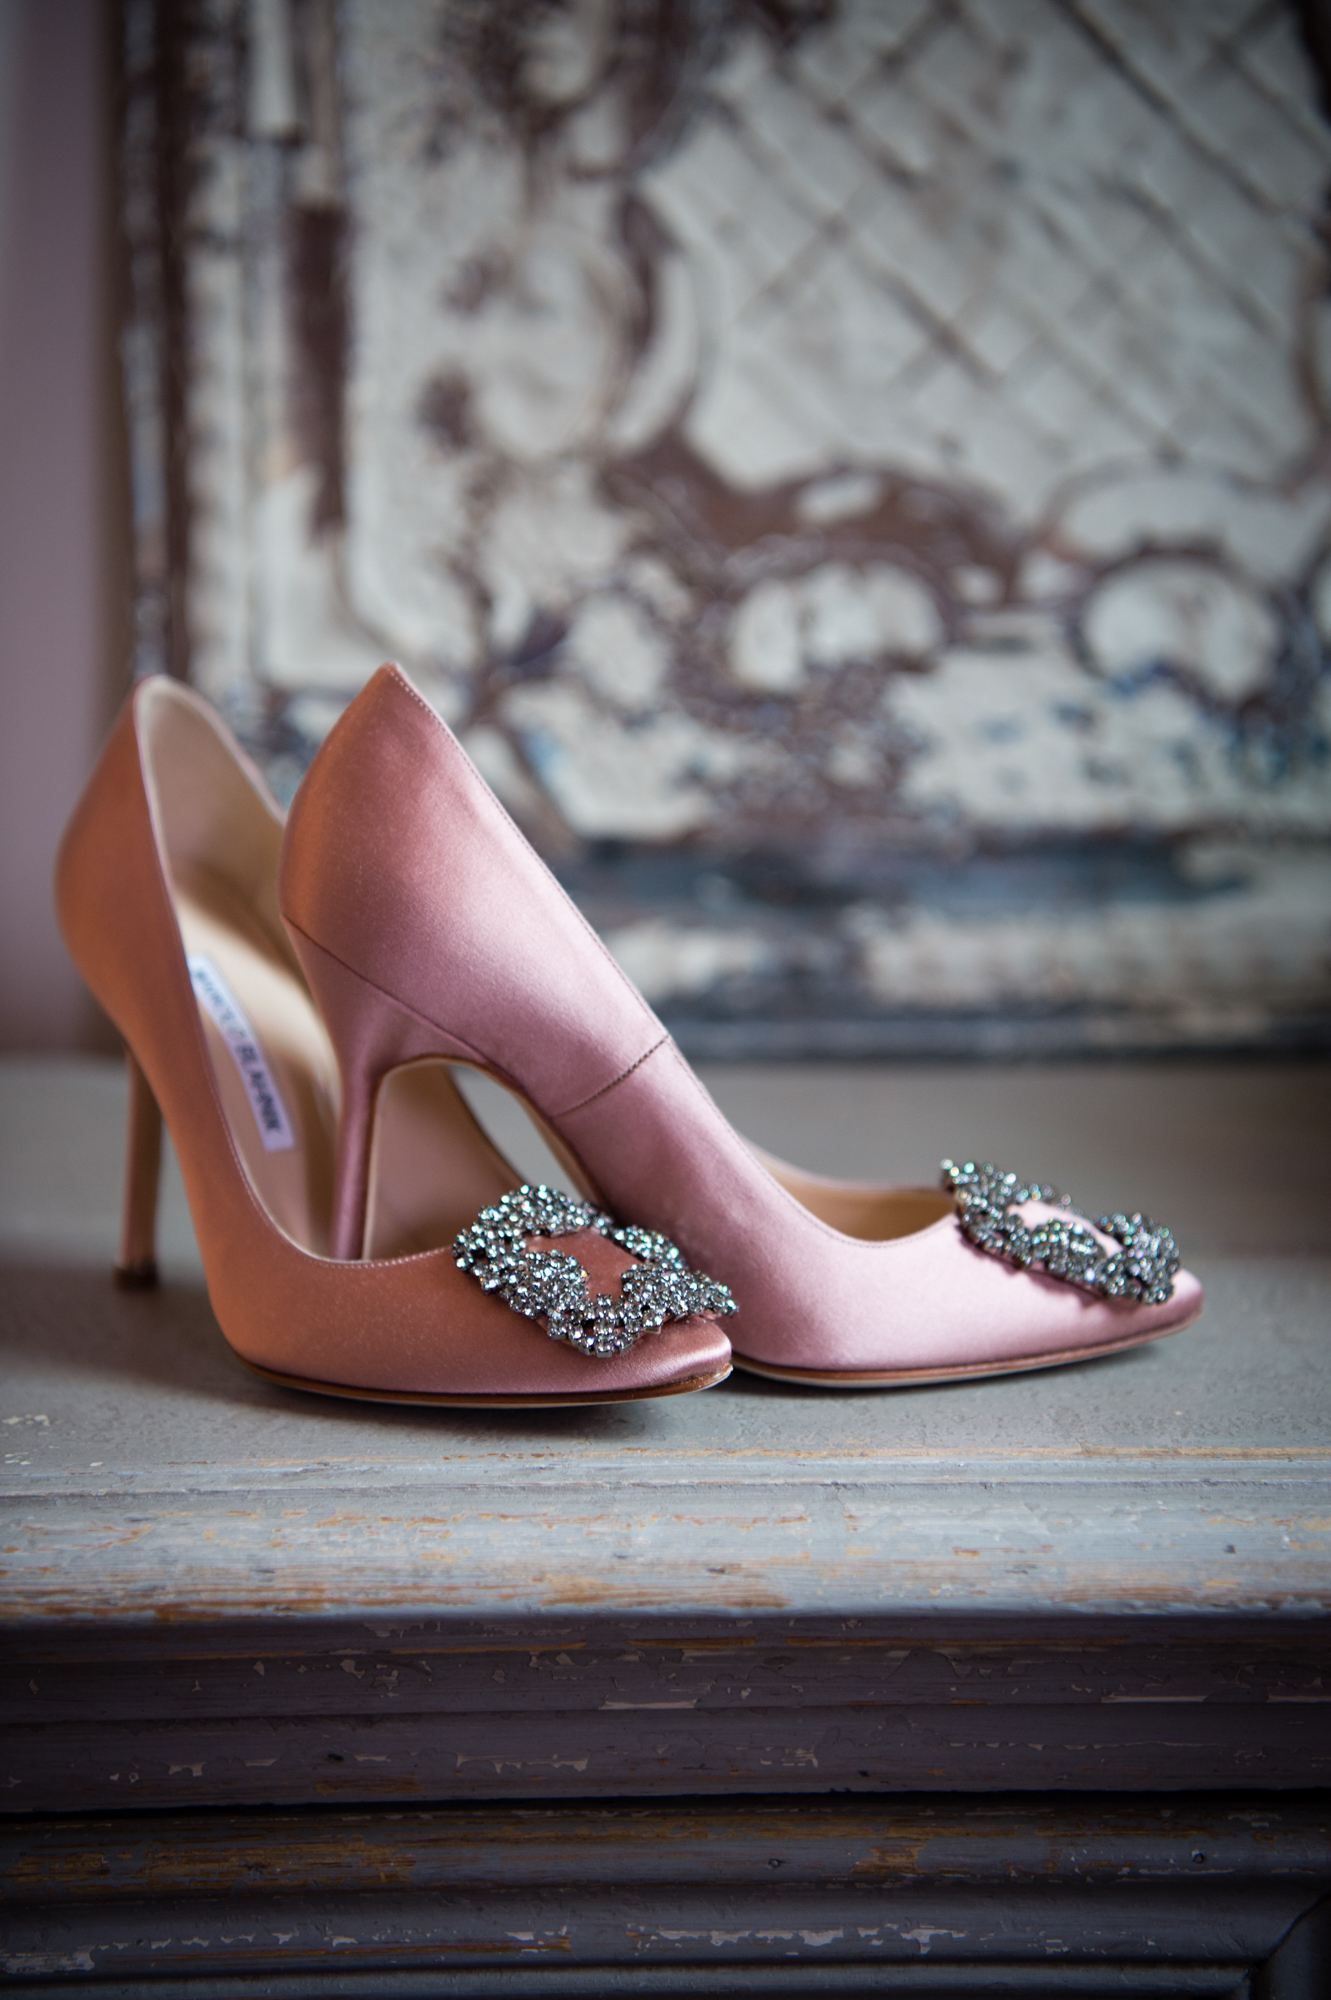 A pair of Manolo Blahnik bridal shoes